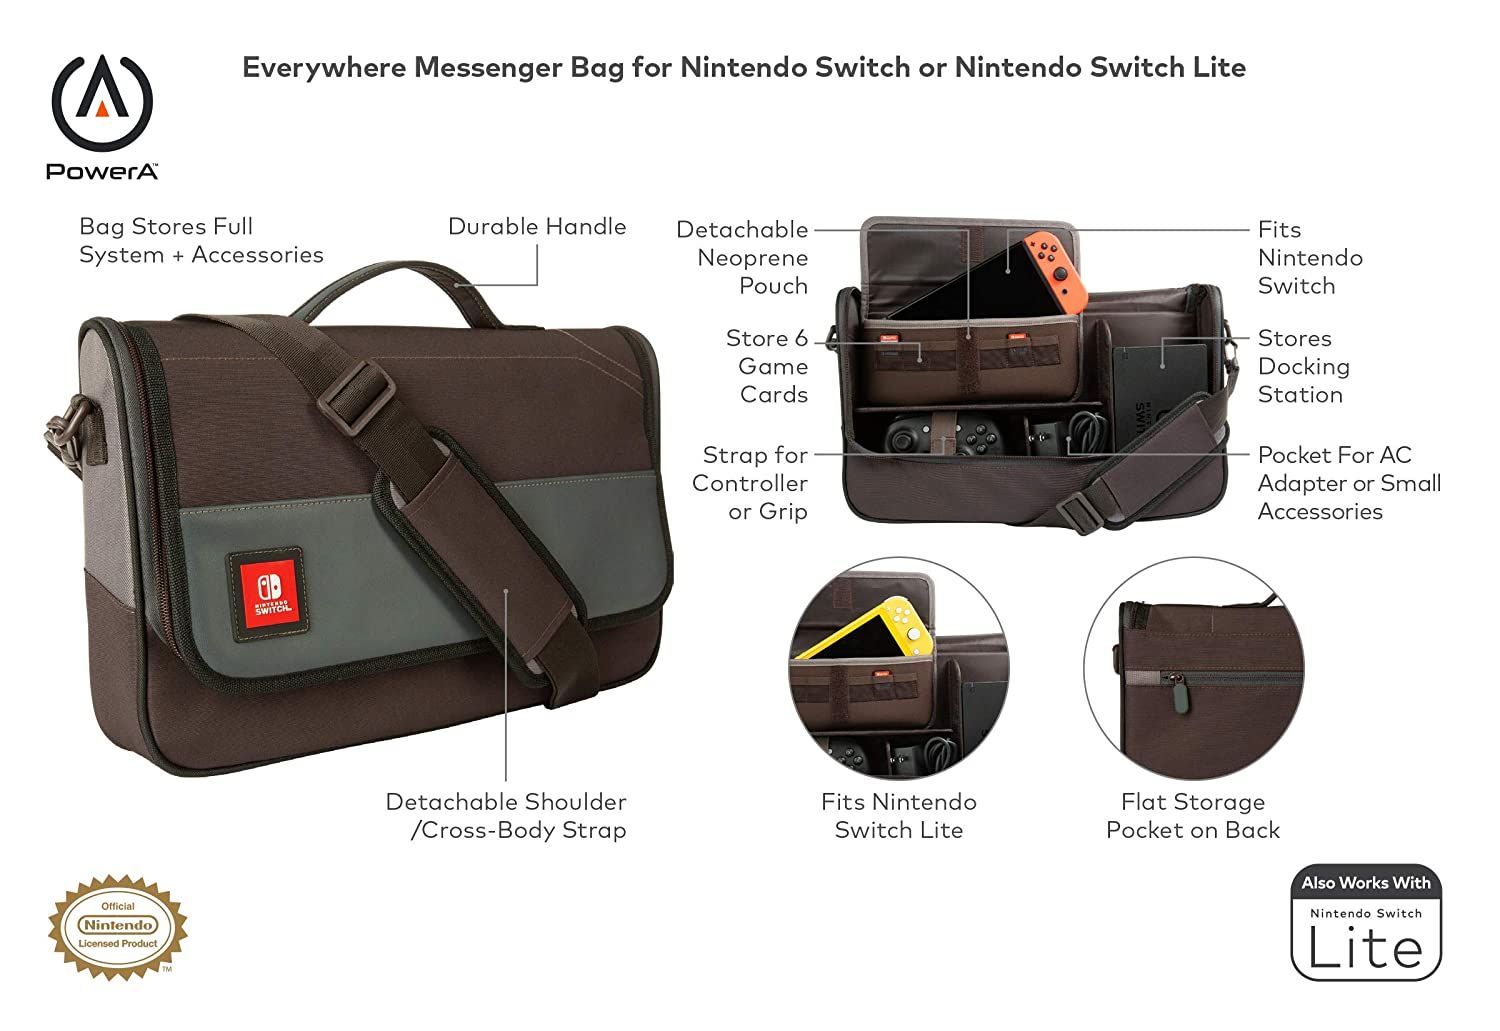 PowerA Everywhere Messenger Bag features